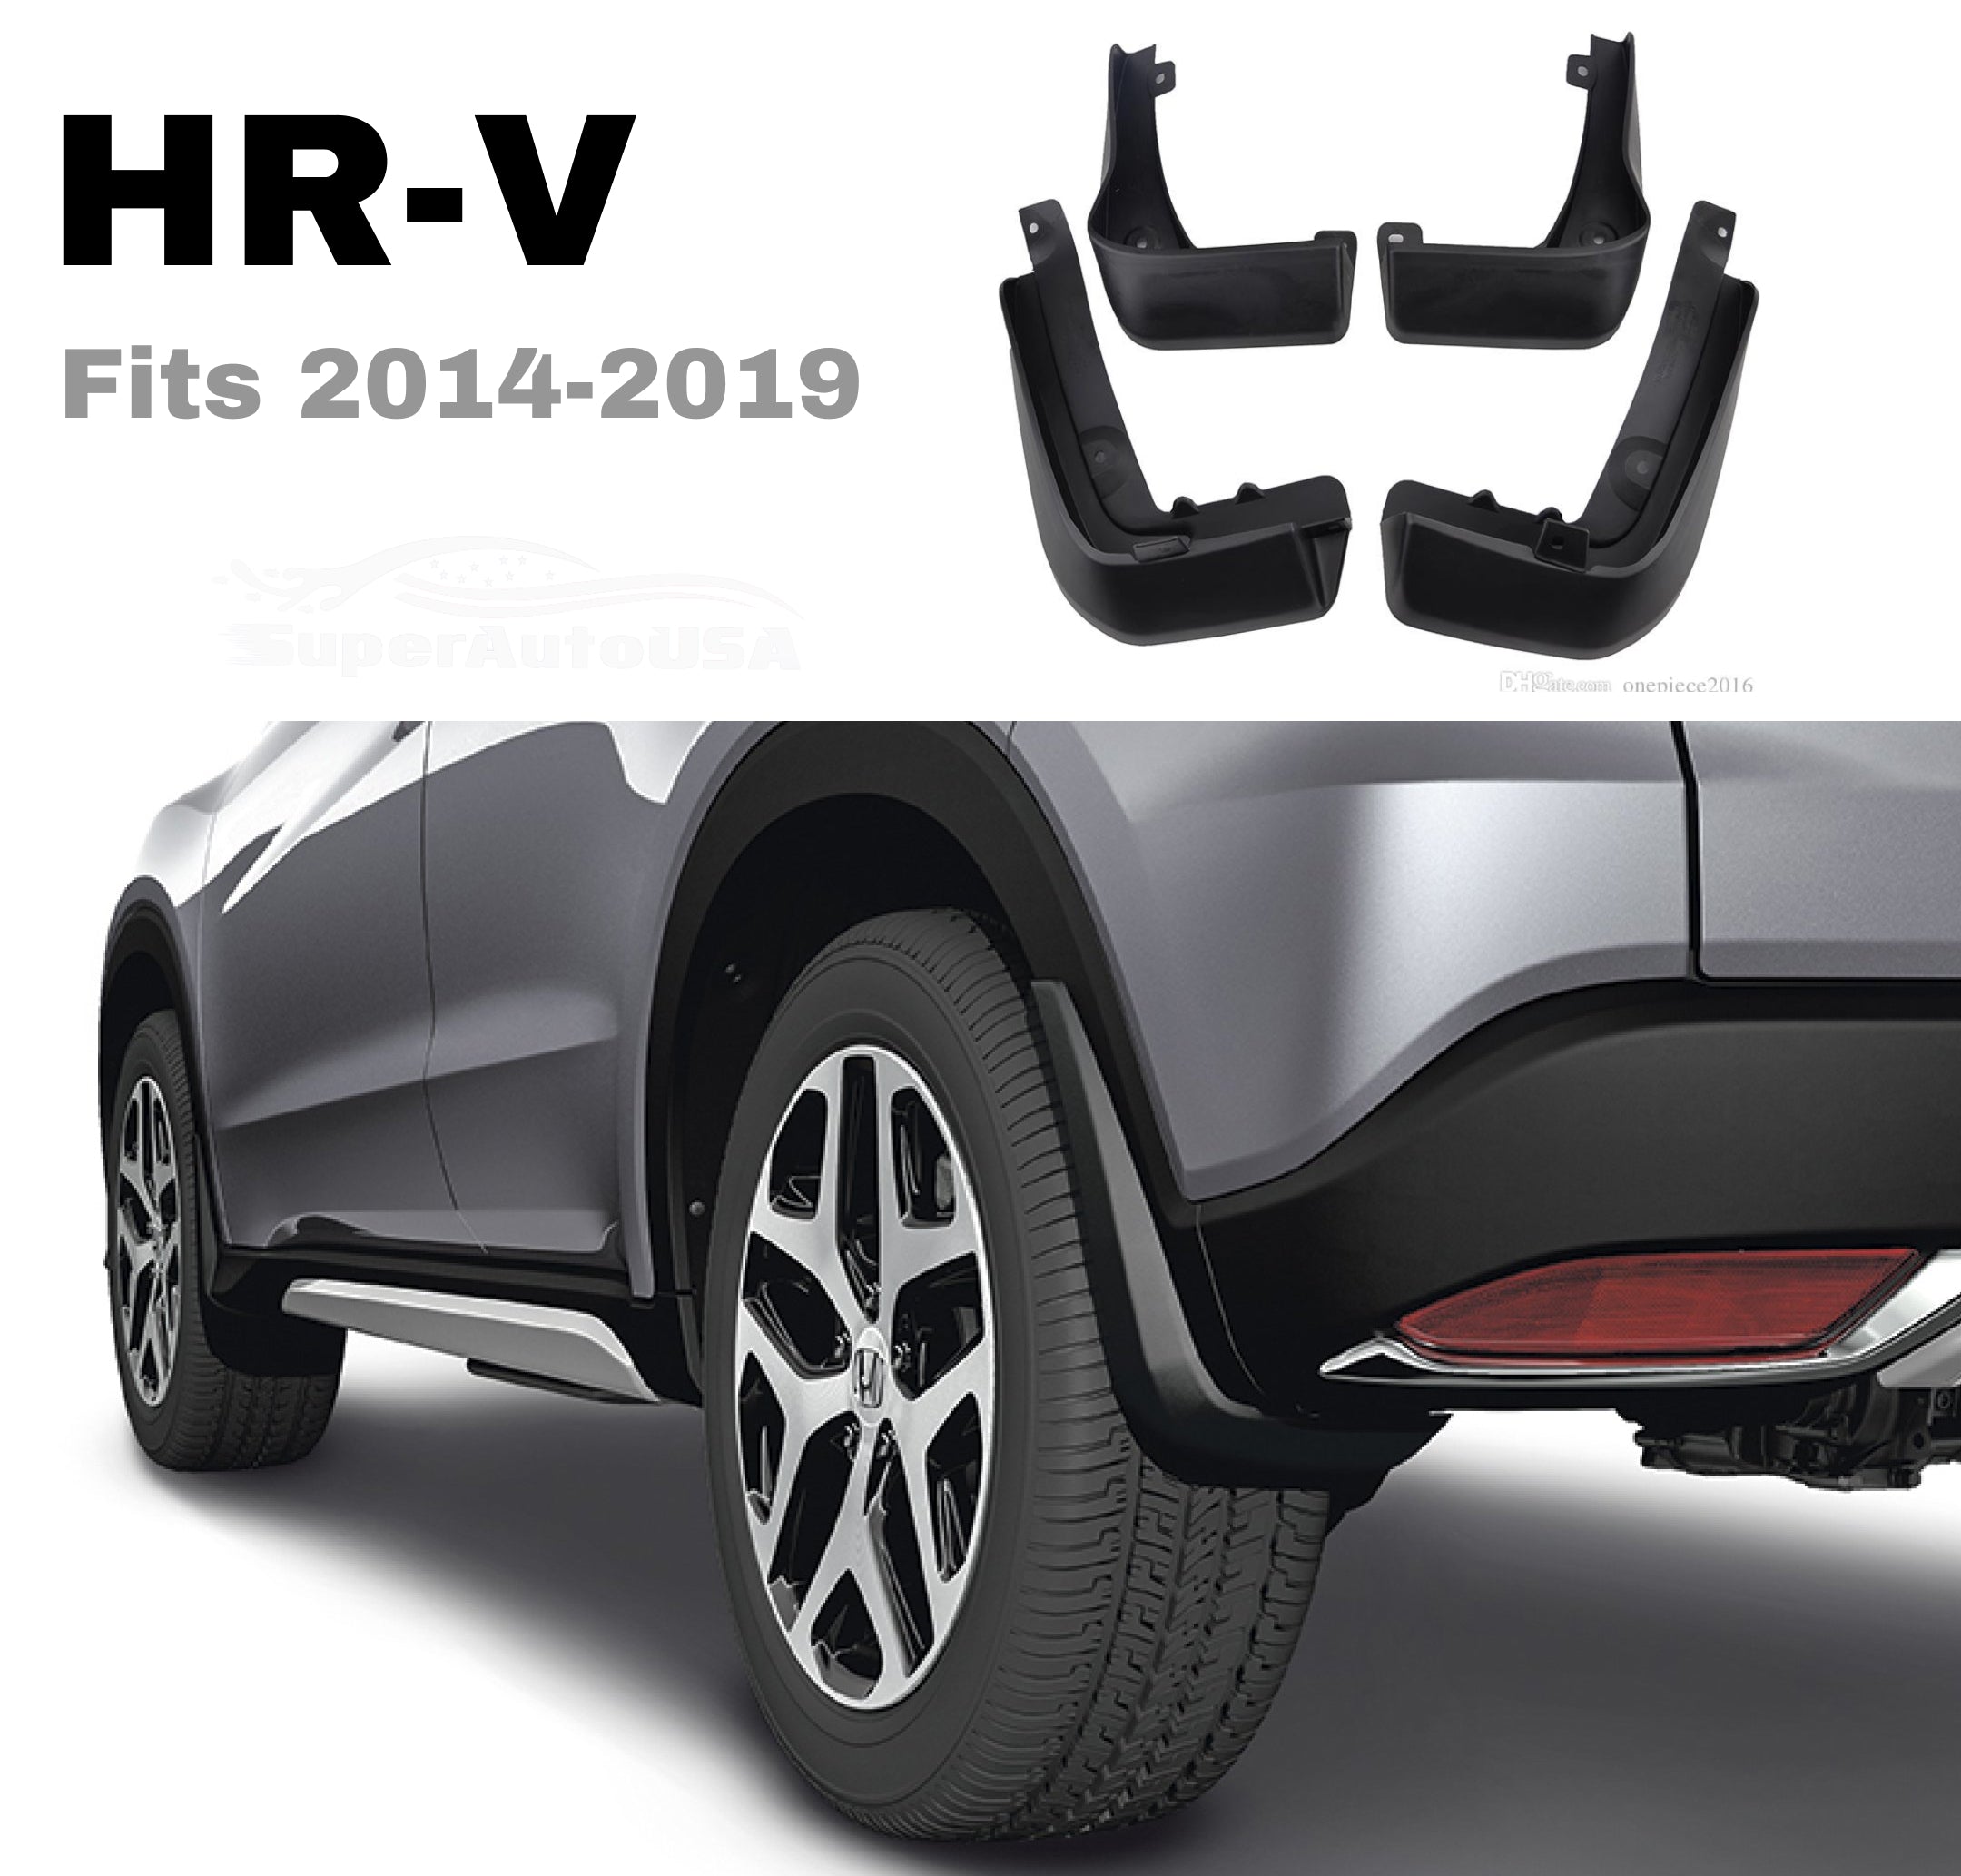 Guardabarros para Honda HRV HR-V 2014-2021, color negro